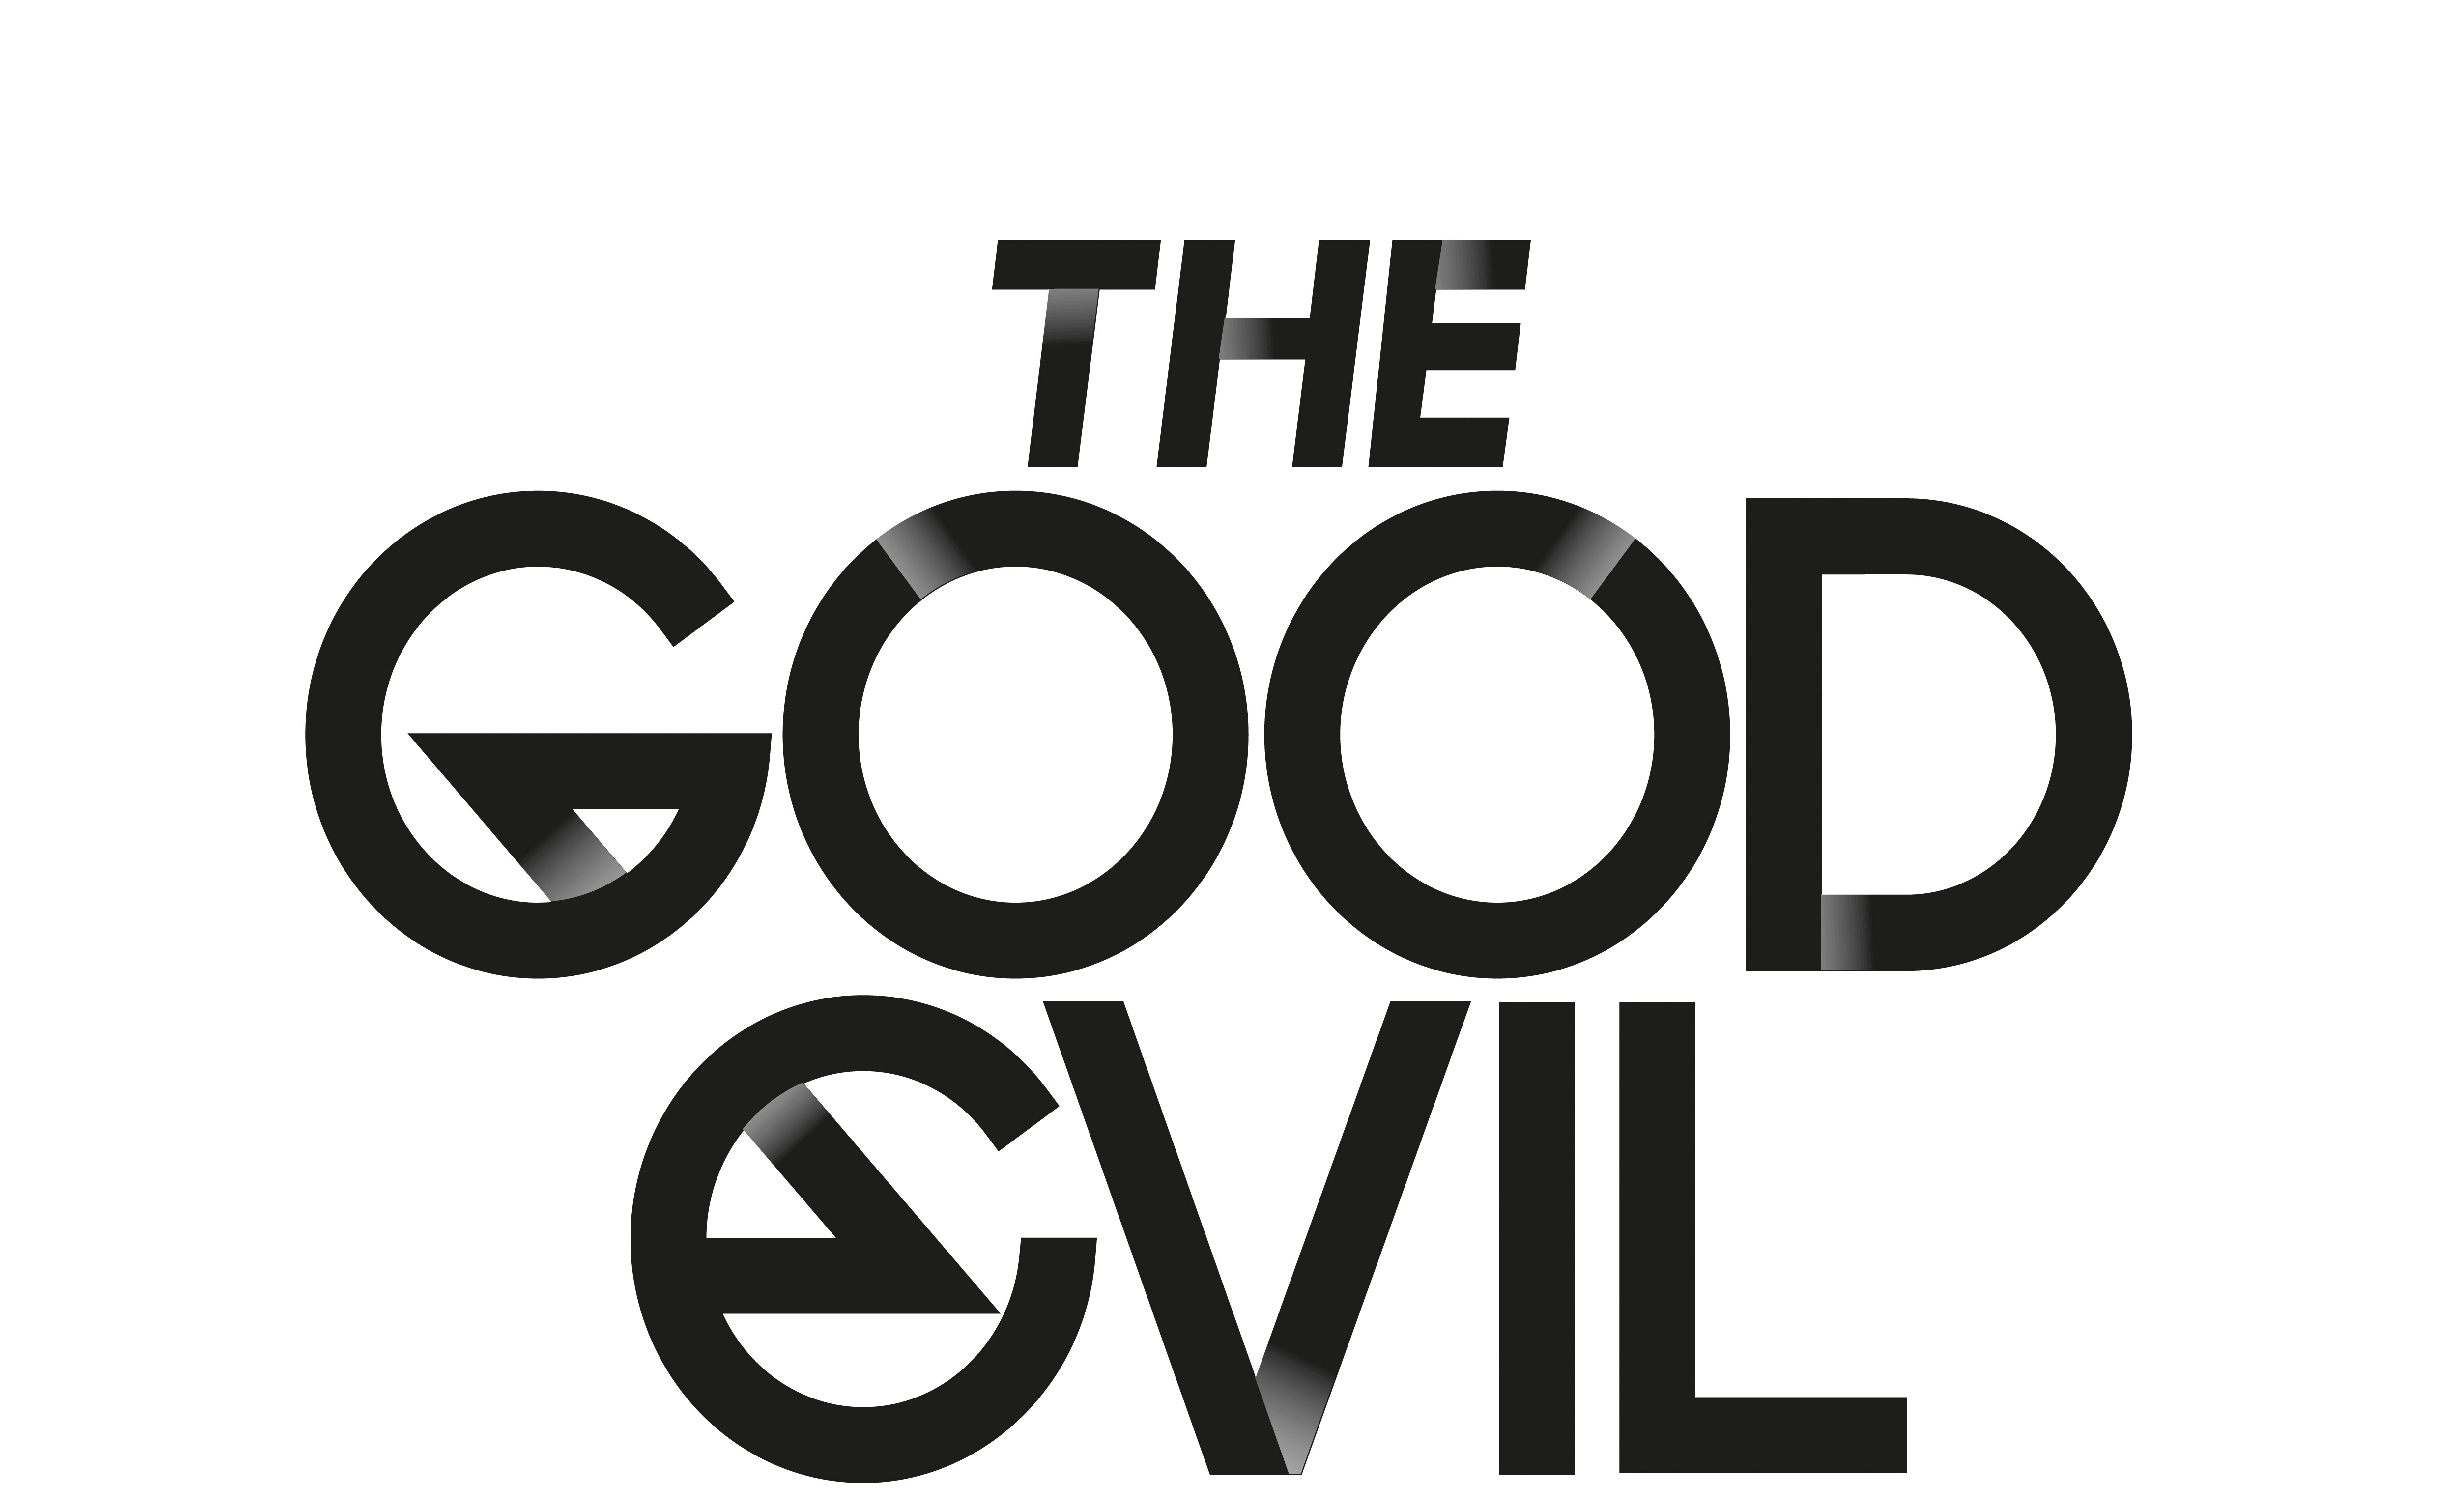 thegoodevil logo black beschnitten